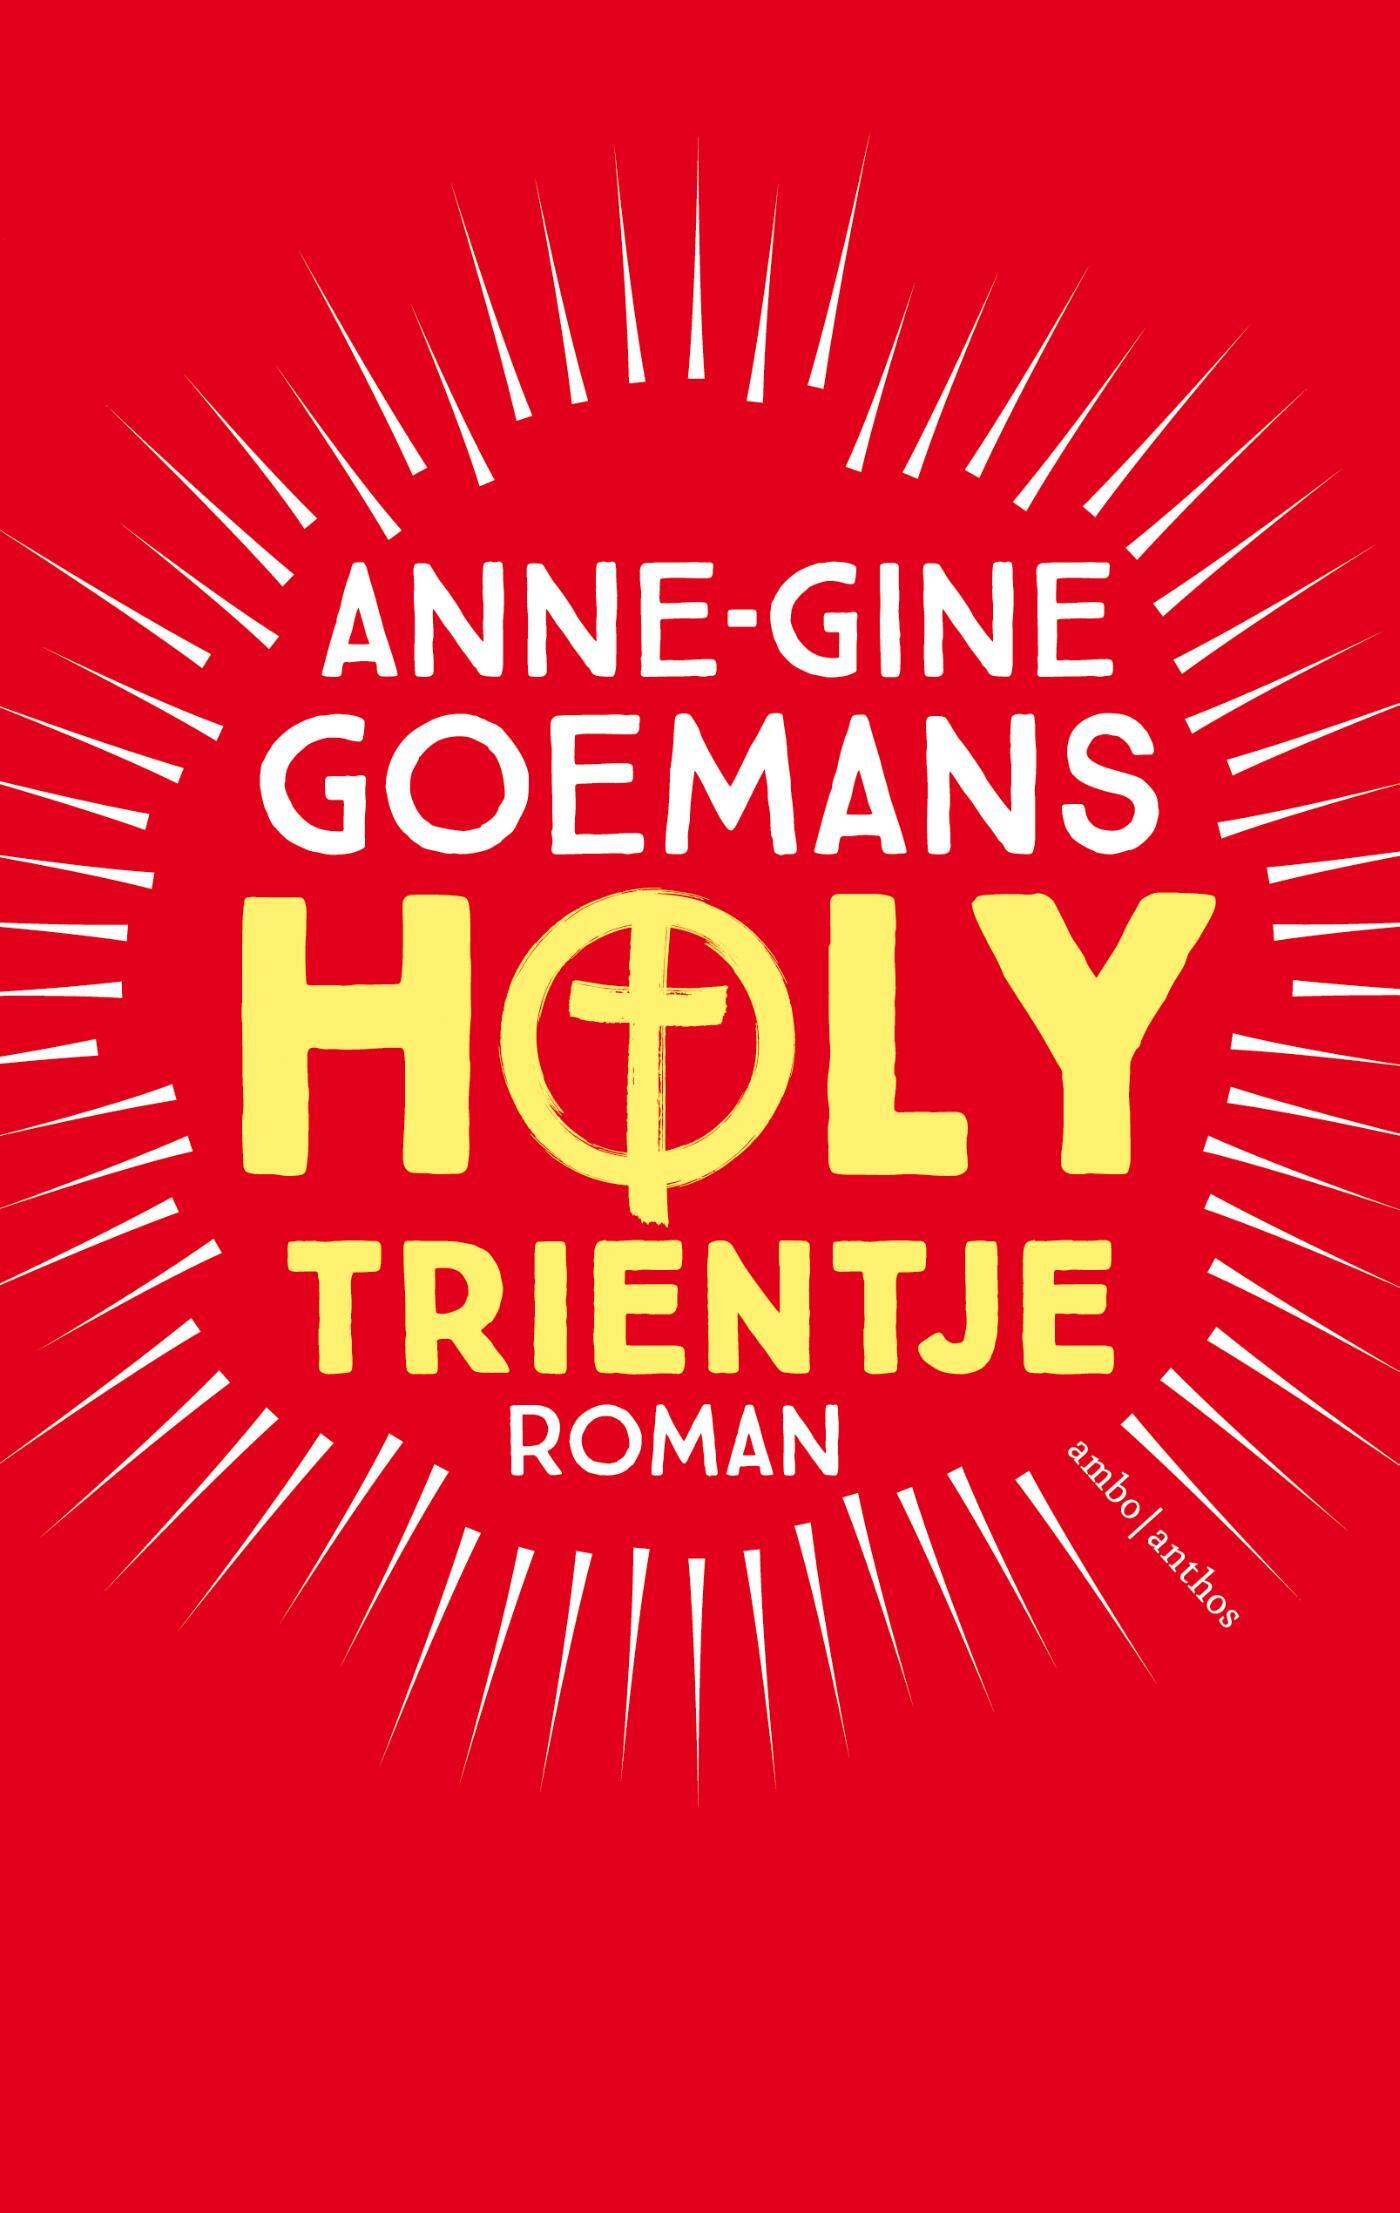 Anne-Ginne Goemans - Holy Trientje